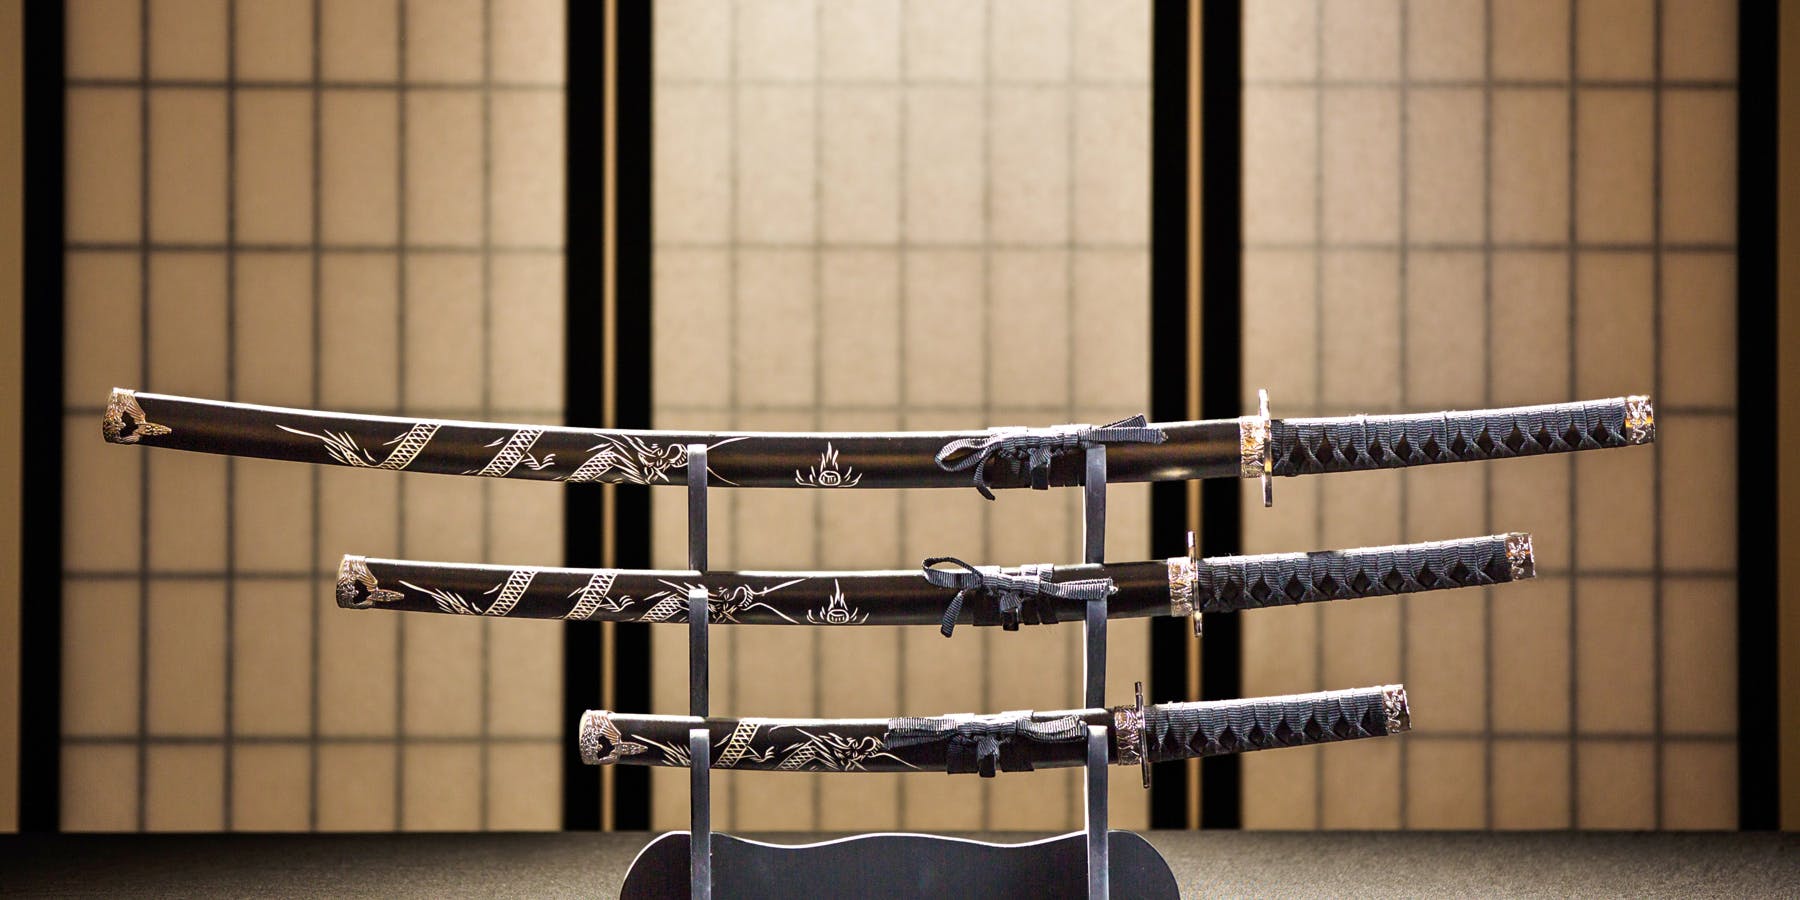 Samuari swords in Japan